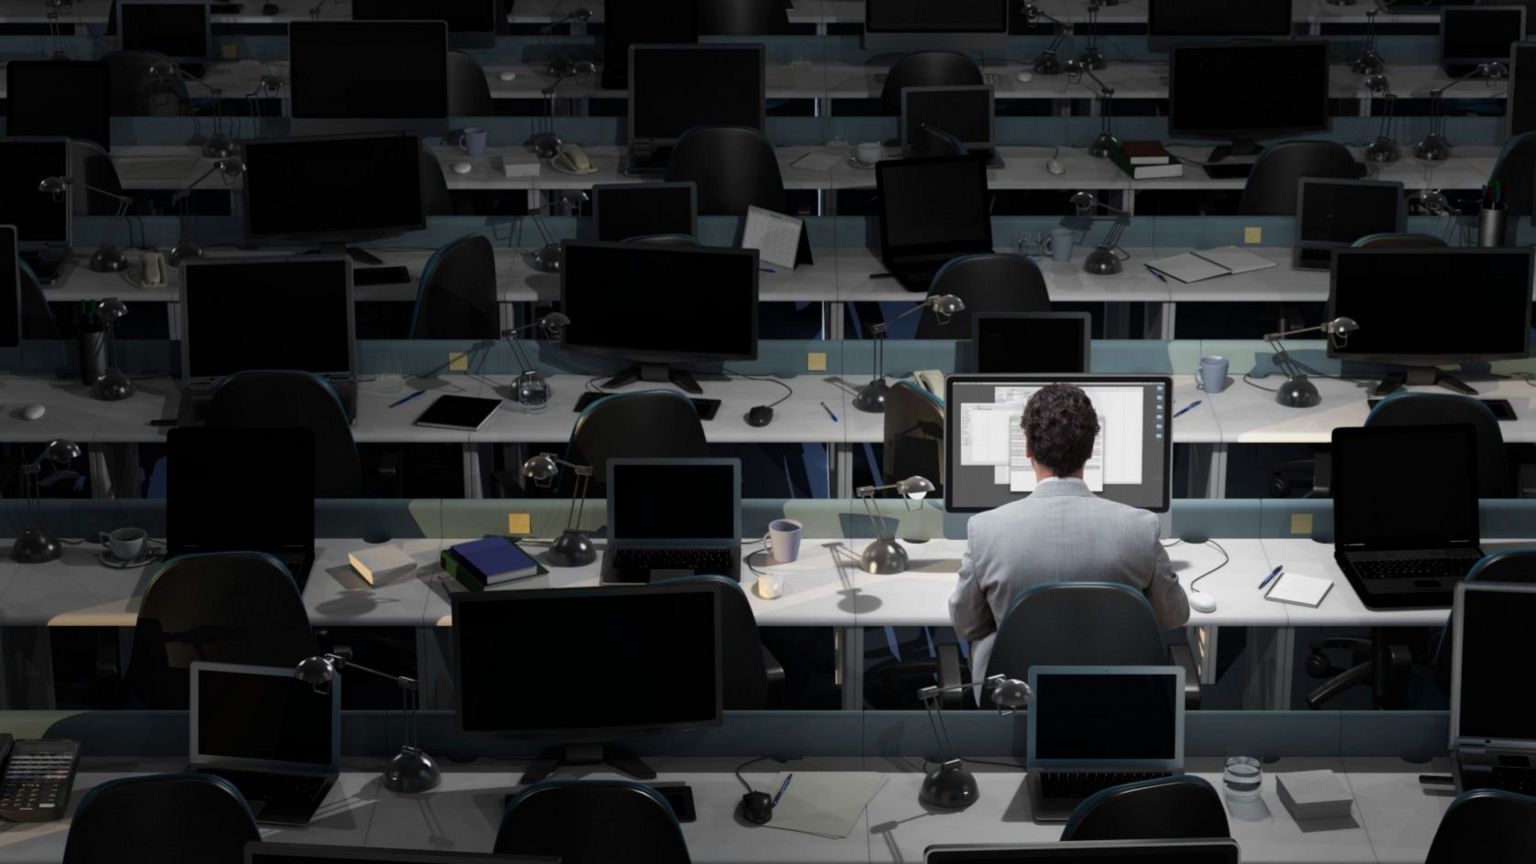 Man at workstation alone - stock image